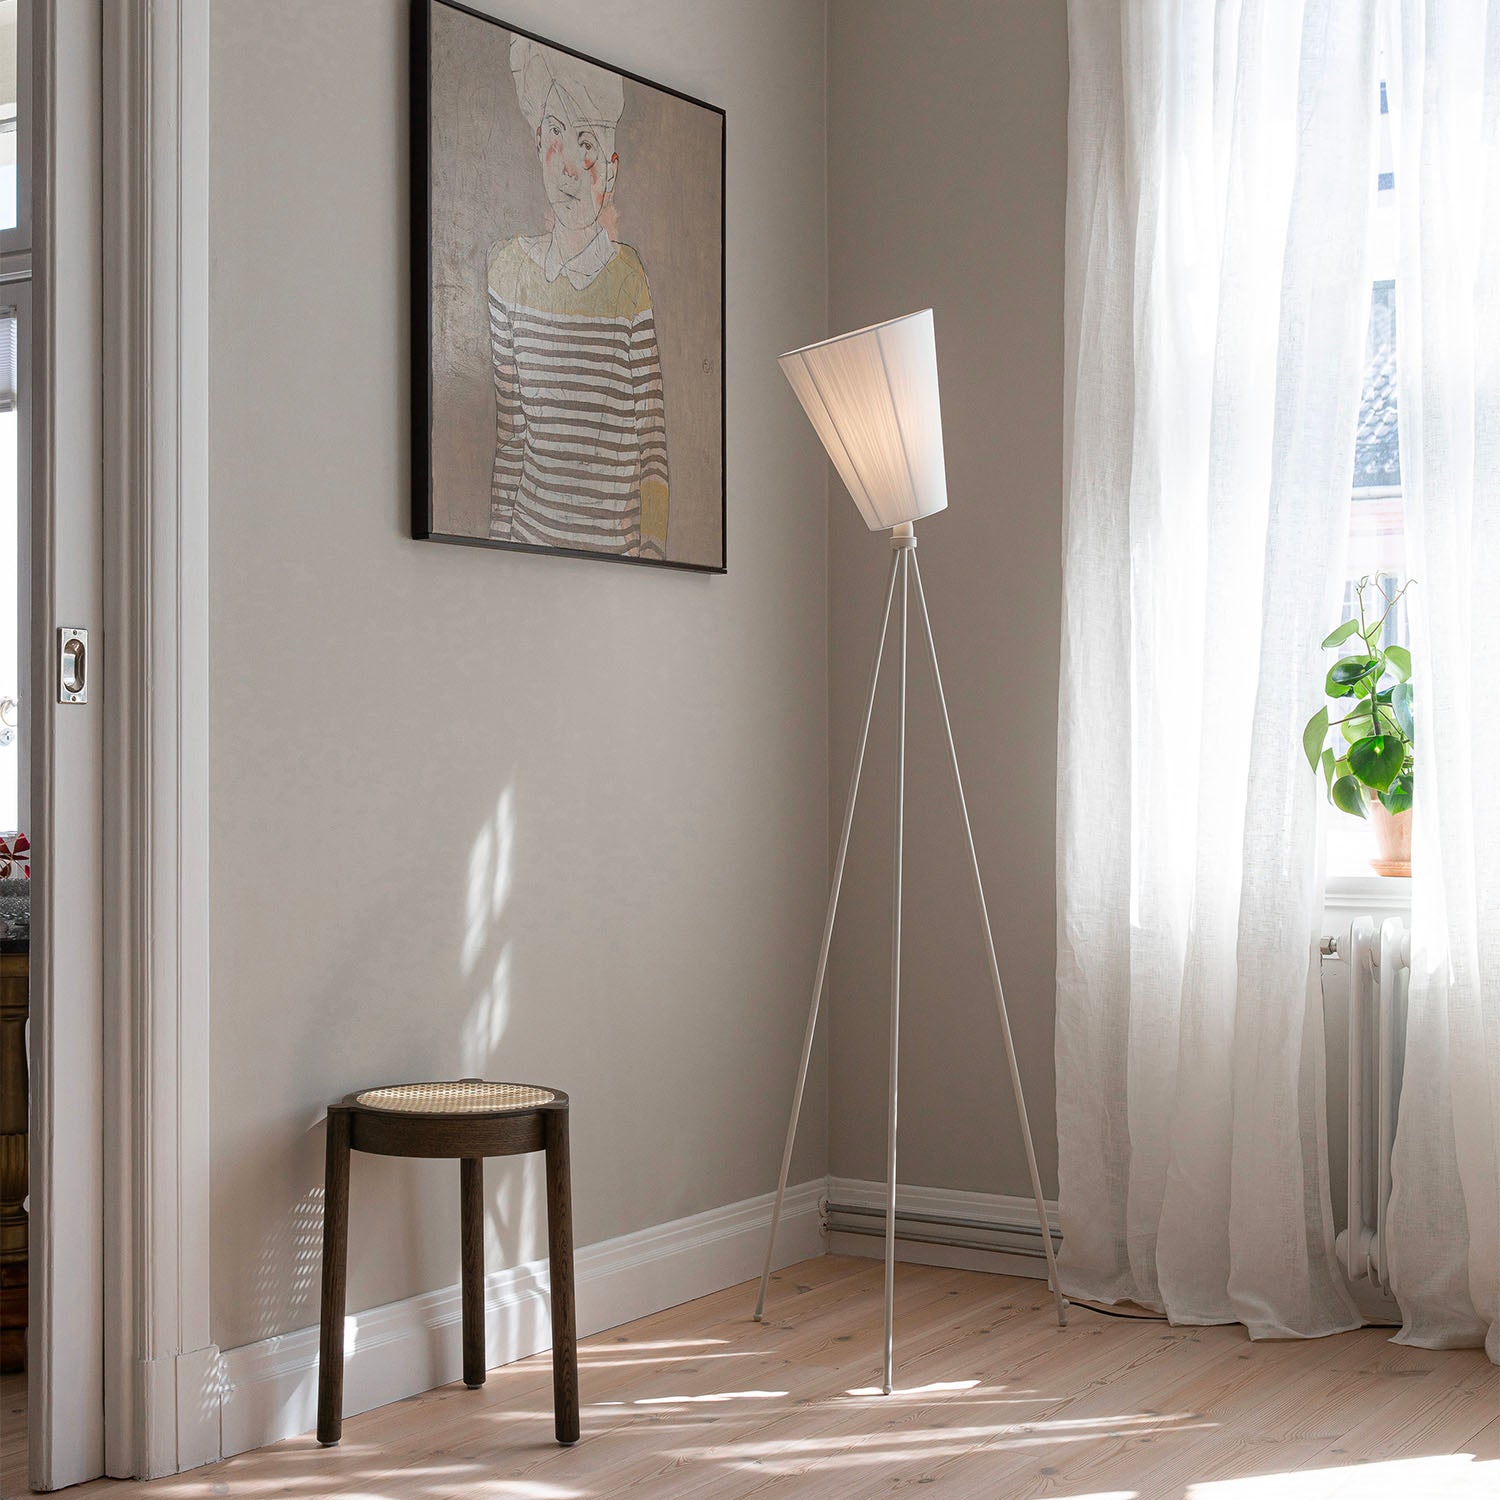 OSLO WOOD - Tripod floor lamp, vintage fabric lampshade